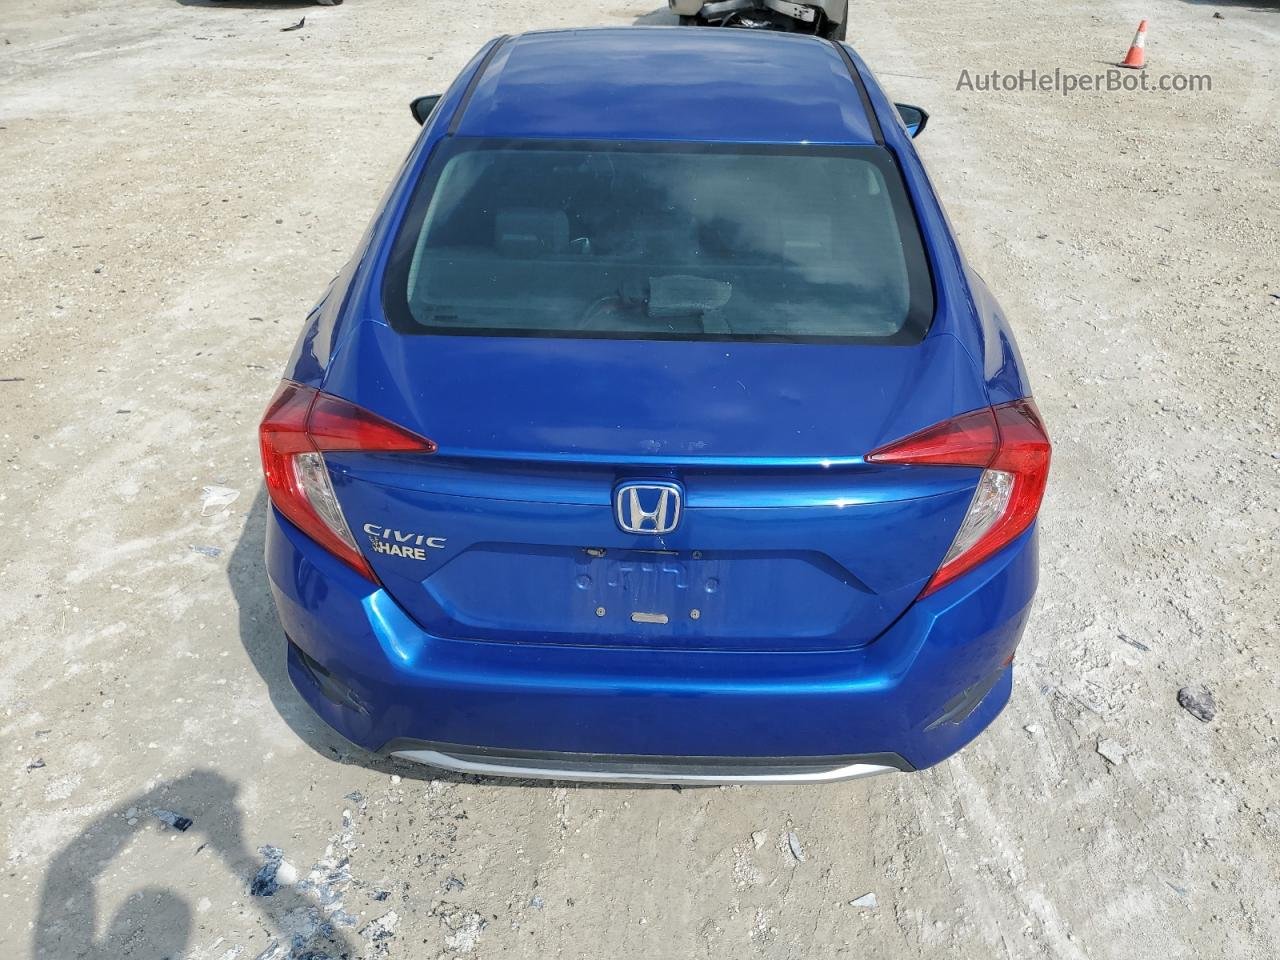 2020 Honda Civic Lx Синий vin: 19XFC2F68LE022719